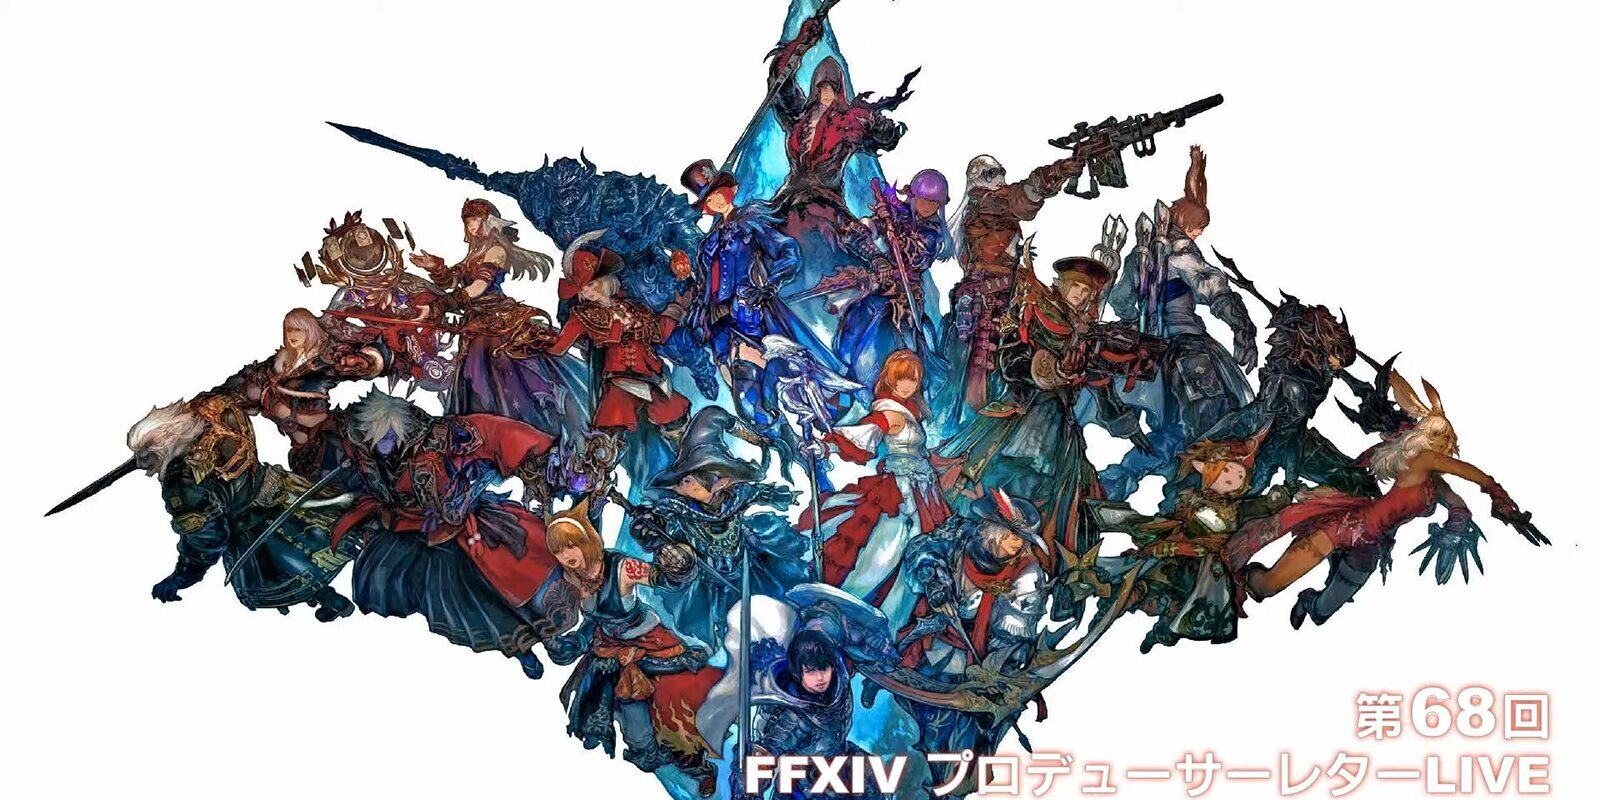 'Final Fantasy XIV' integrará modo un jugador para todas sus mazmorras